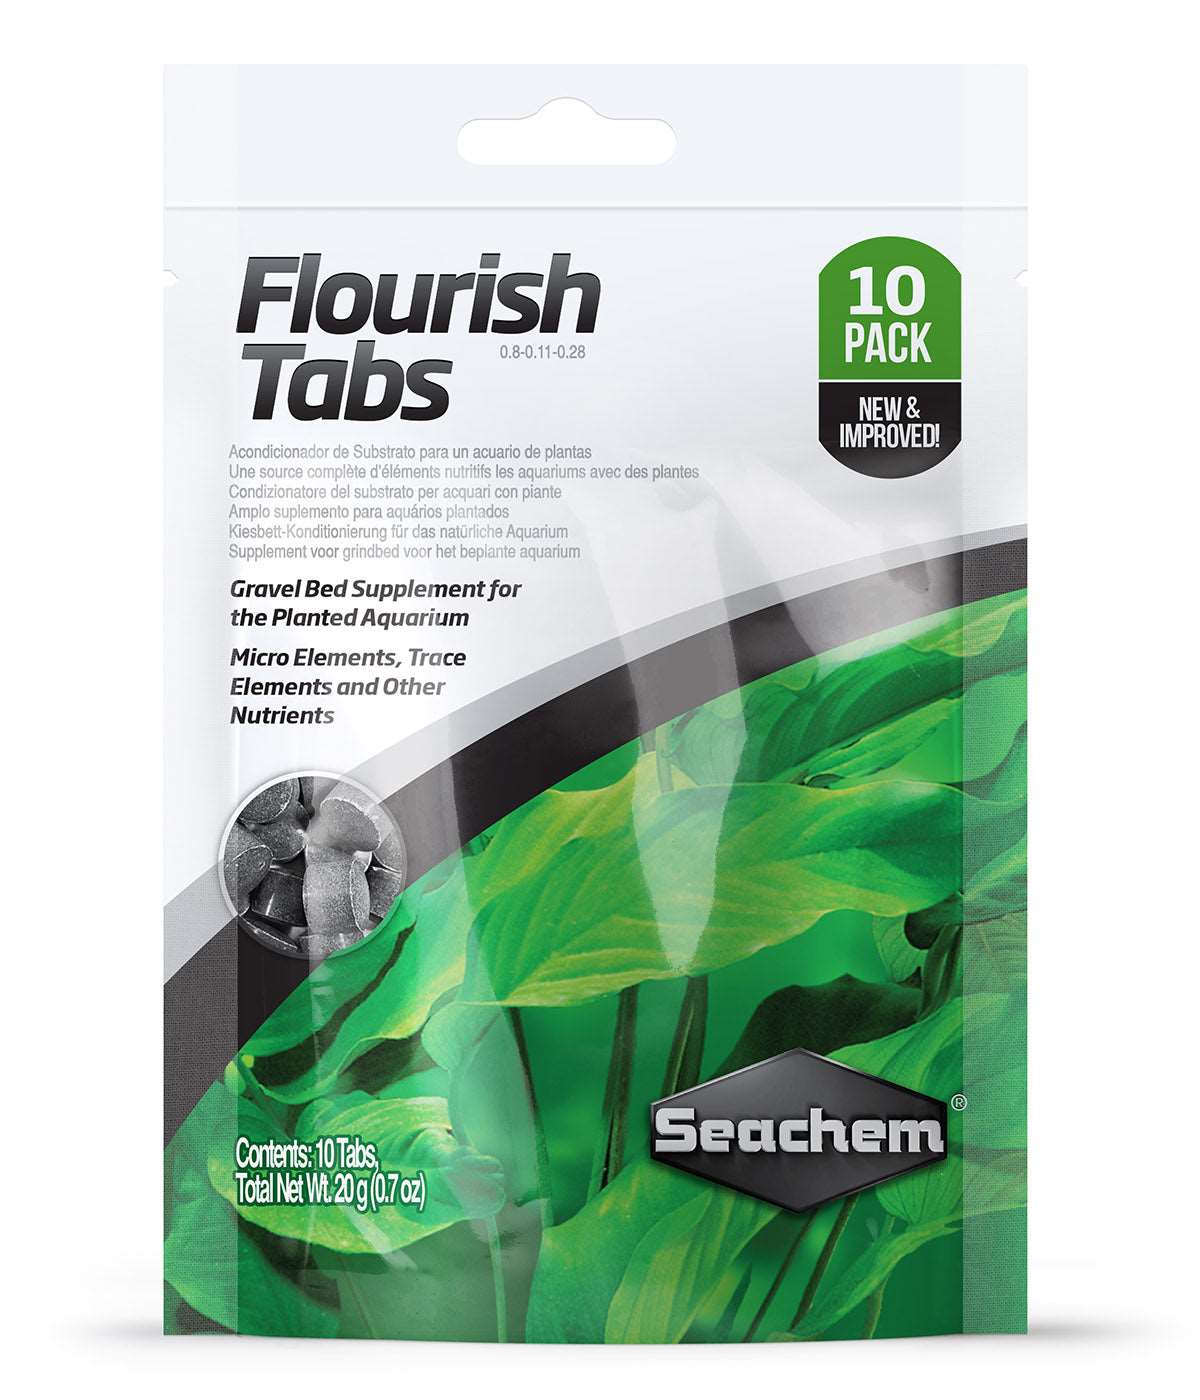 New Seachem Flourish tabs, 10 pack, complete aquarium plant root feeding